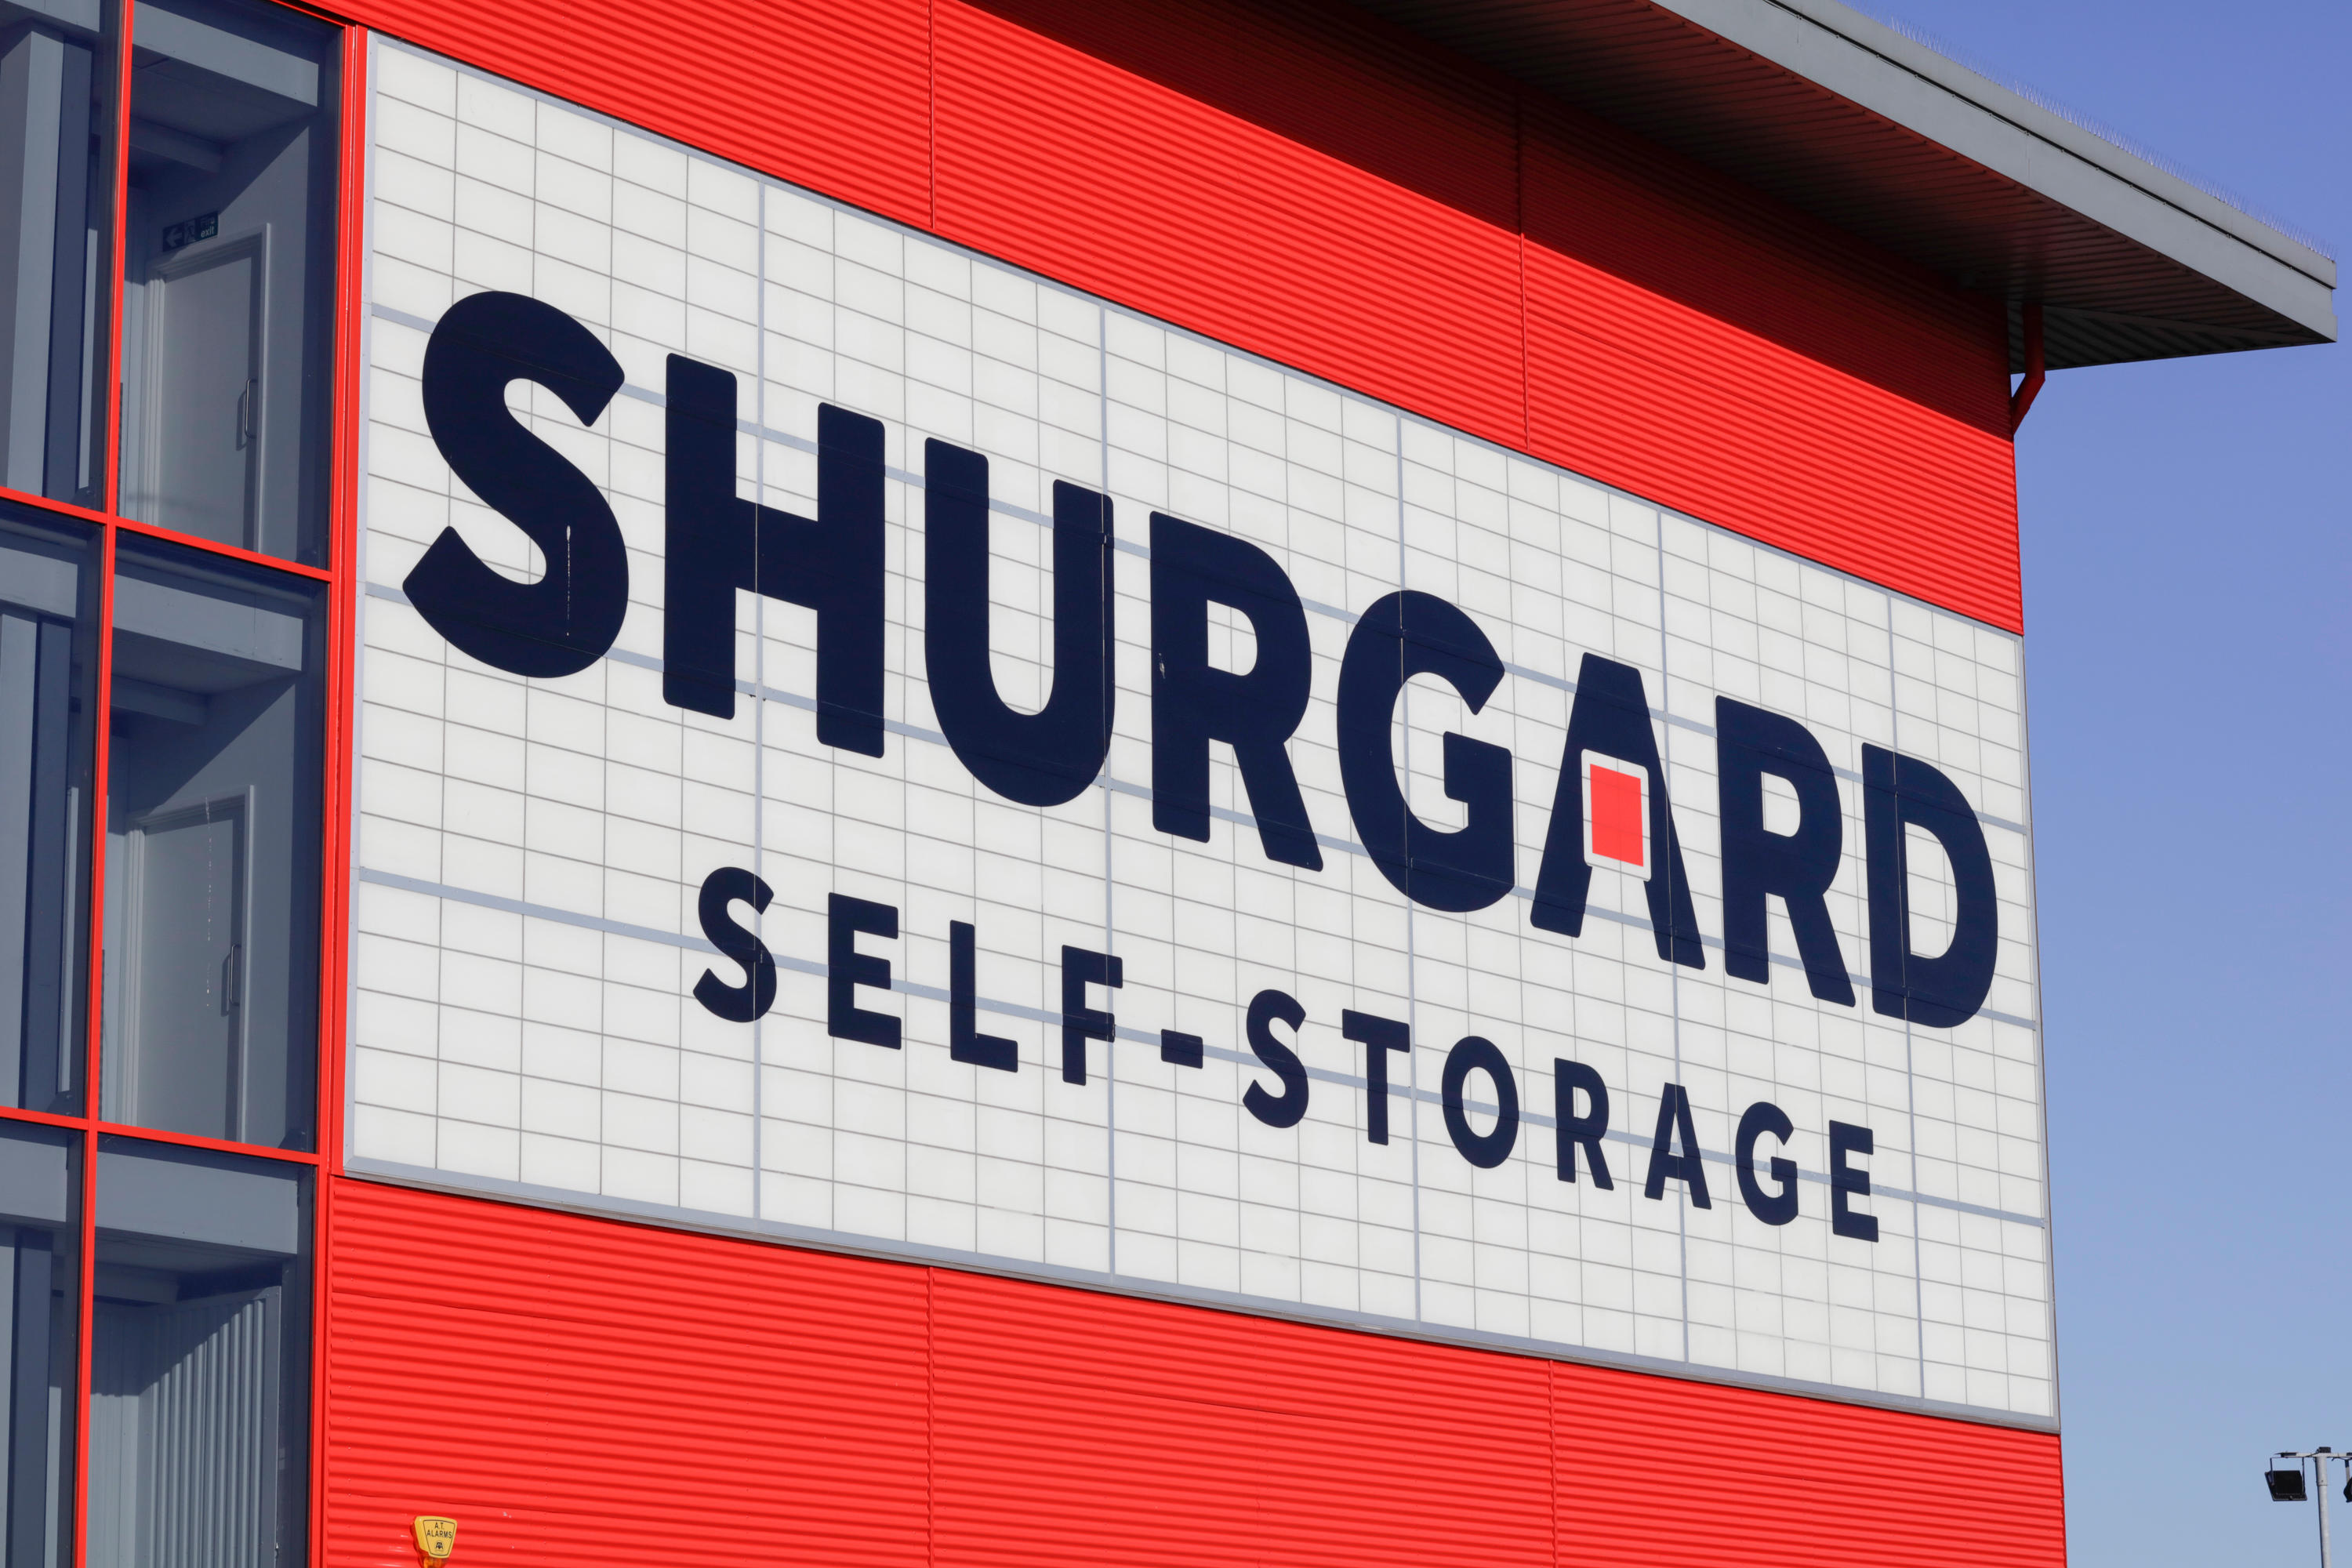 Shurgard Self-Storage Croydon Purley Way - Logo Shurgard Self Storage Croydon Purley Way Croydon 020 8618 1000